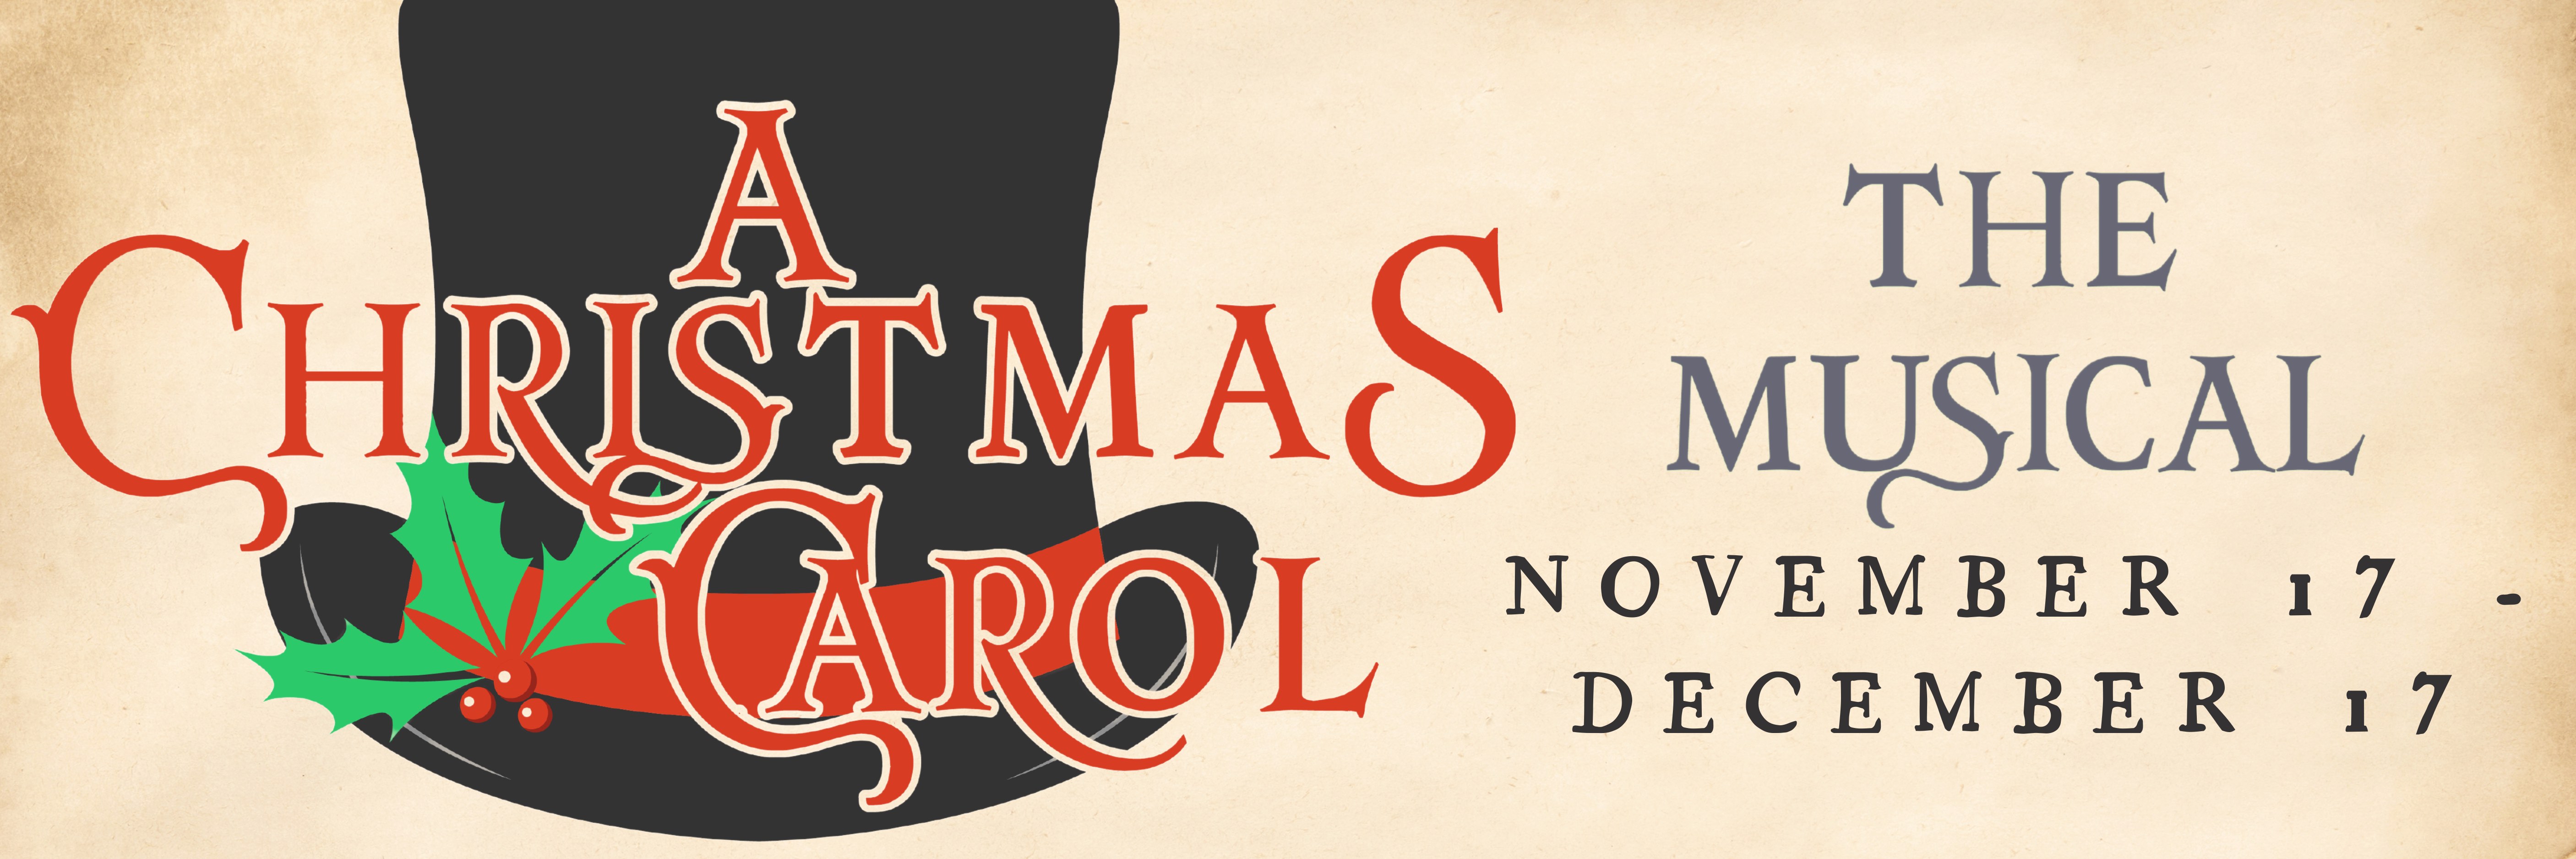 Image for A Christmas Carol: The Musical